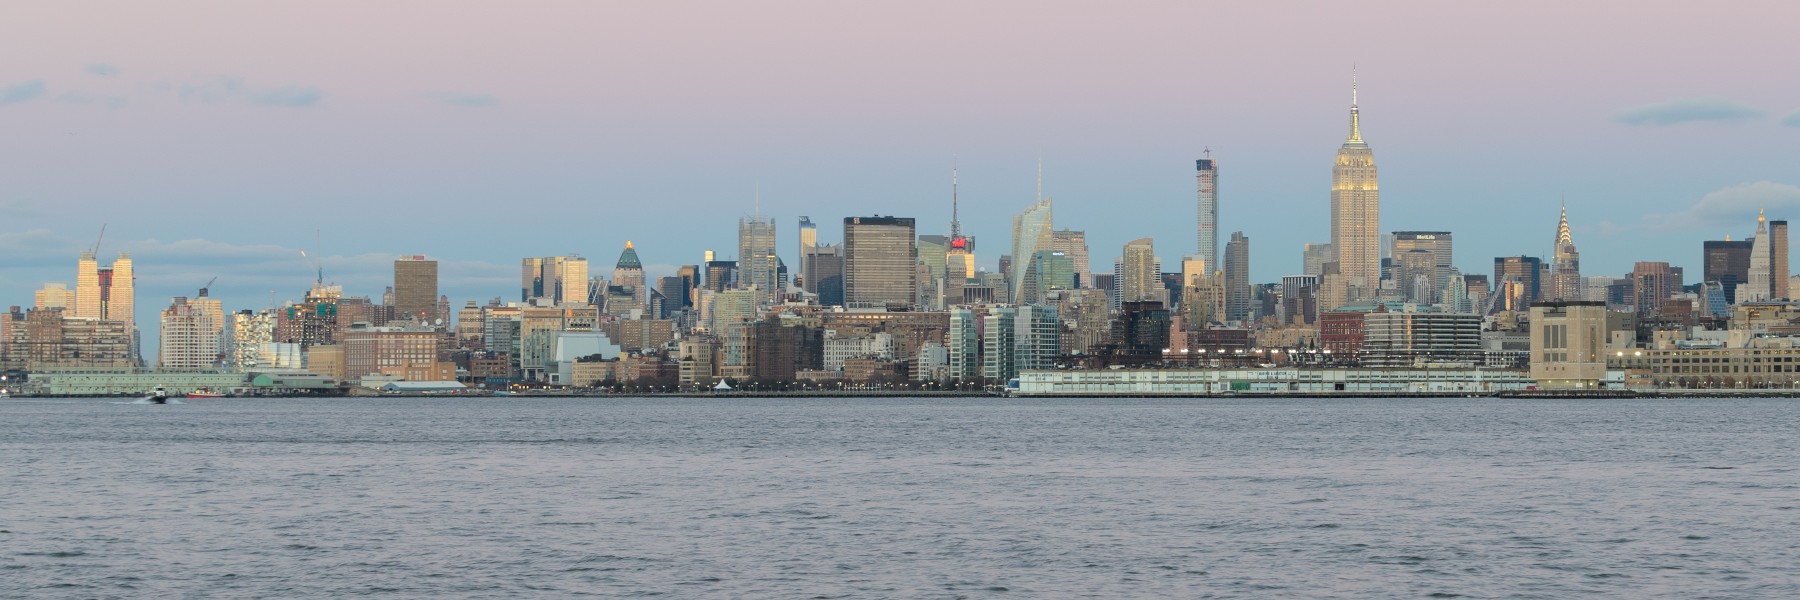 Midtown Manhattan from Jersey City November 2014